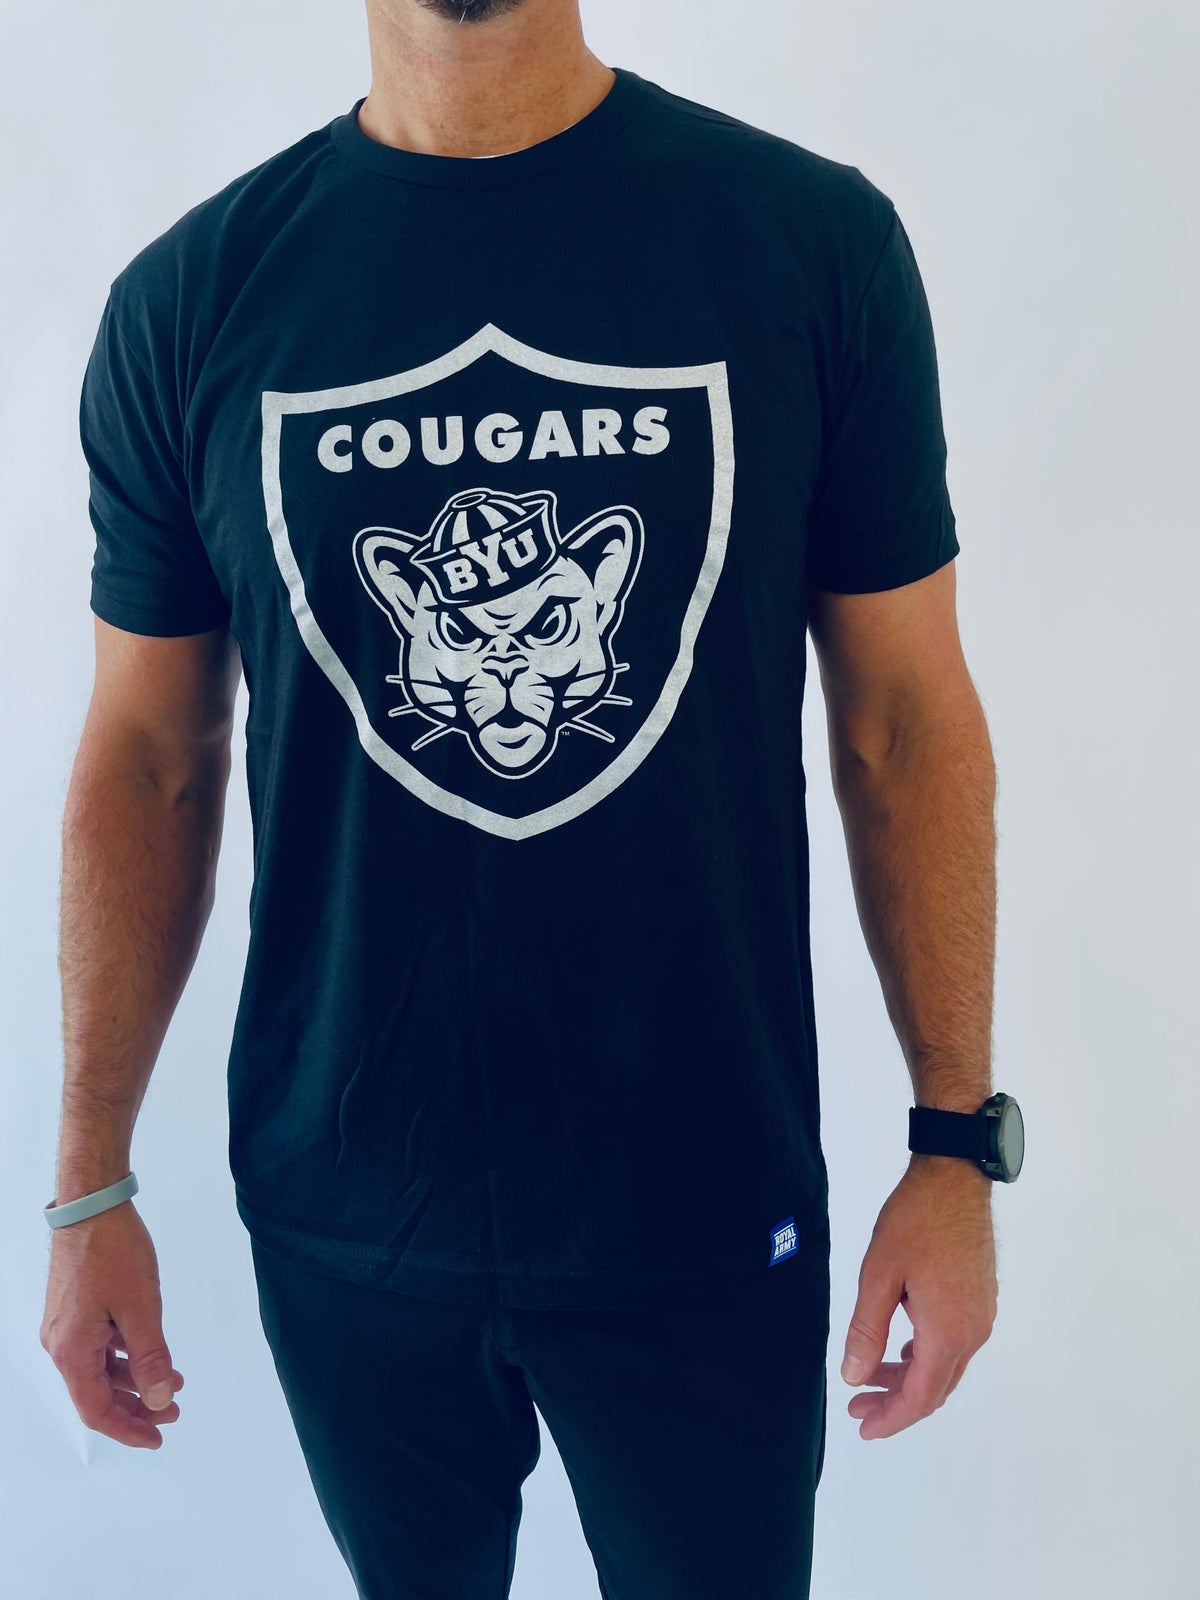 Royal Army Brand Sailor Cougar Crest BYU T-Shirt XL / Black